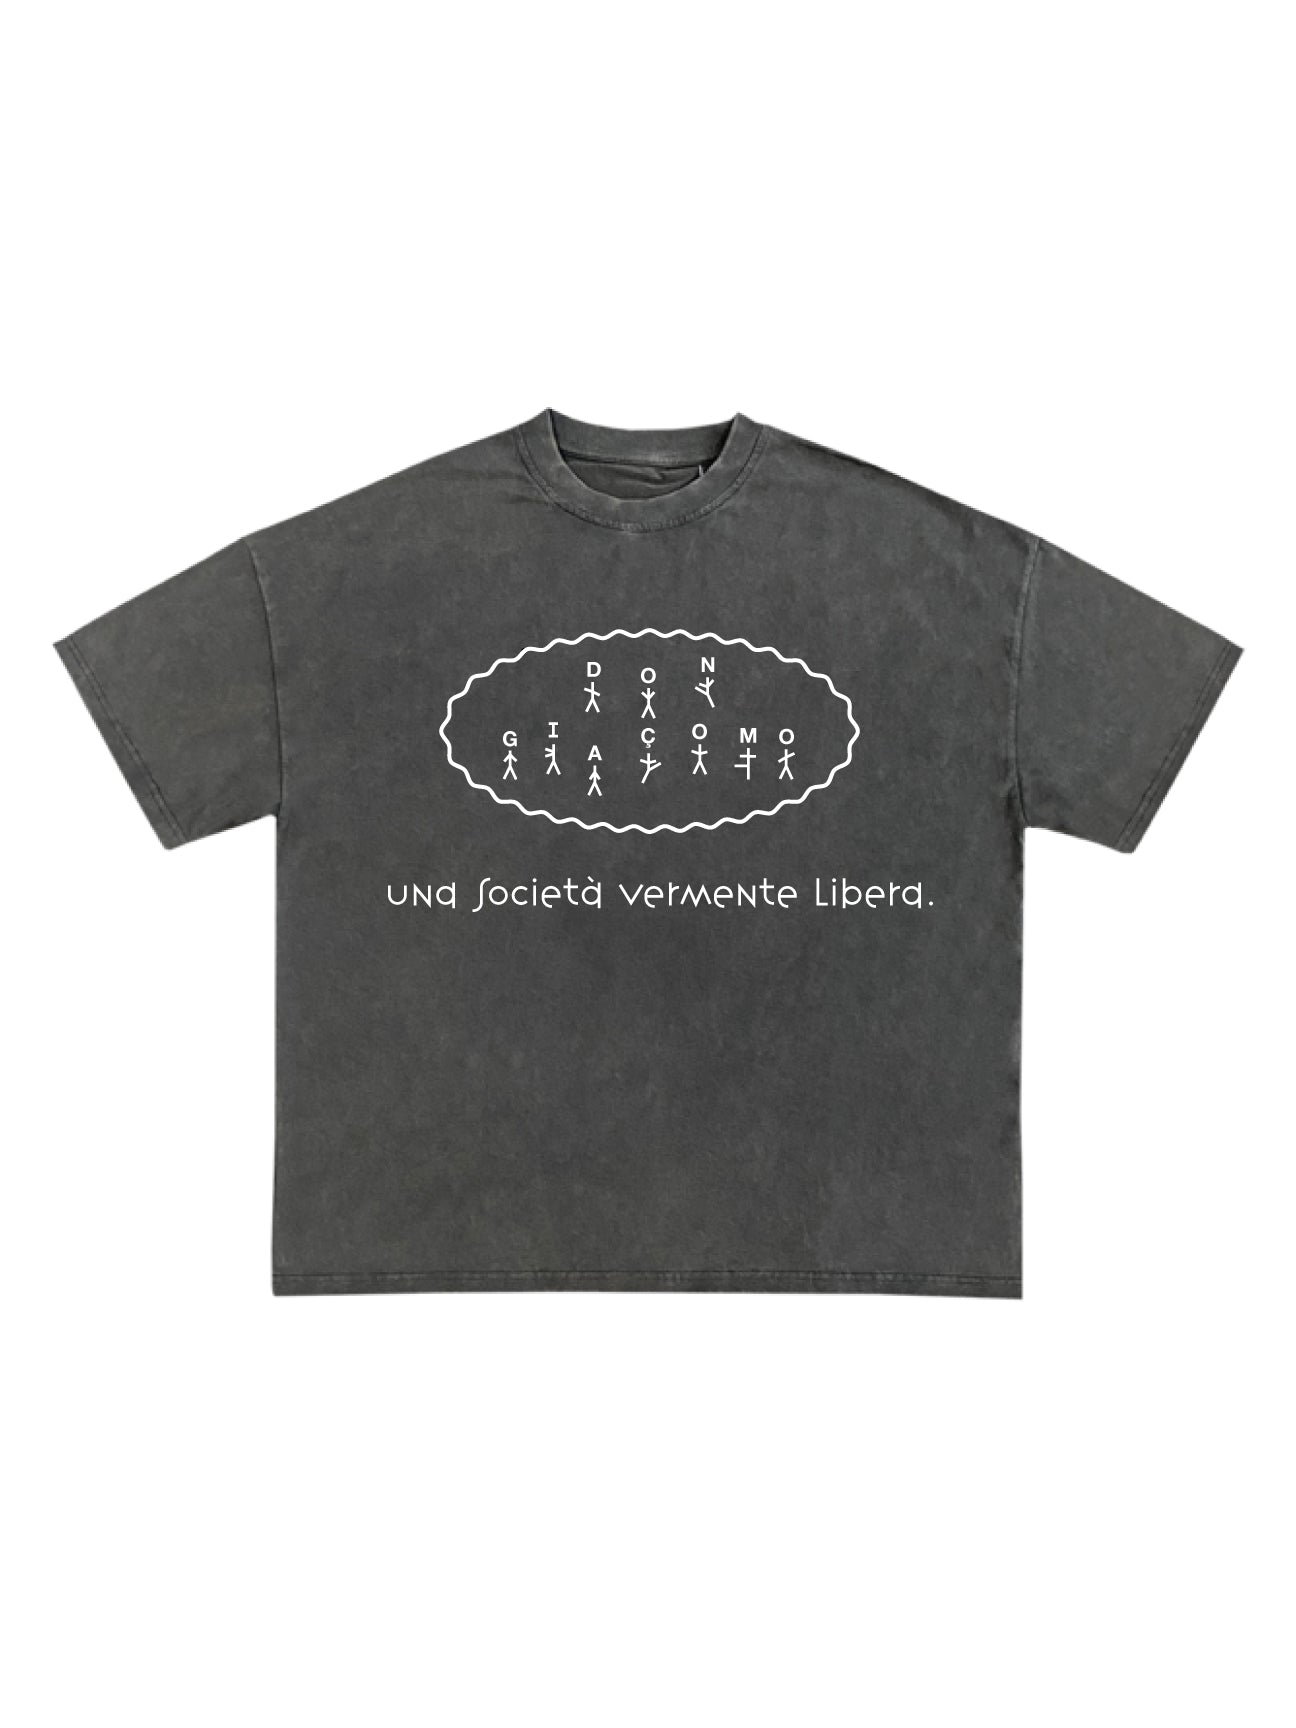 Giaçomo 'Una Società Vermente Libera.' T-Shirt (3 colors)